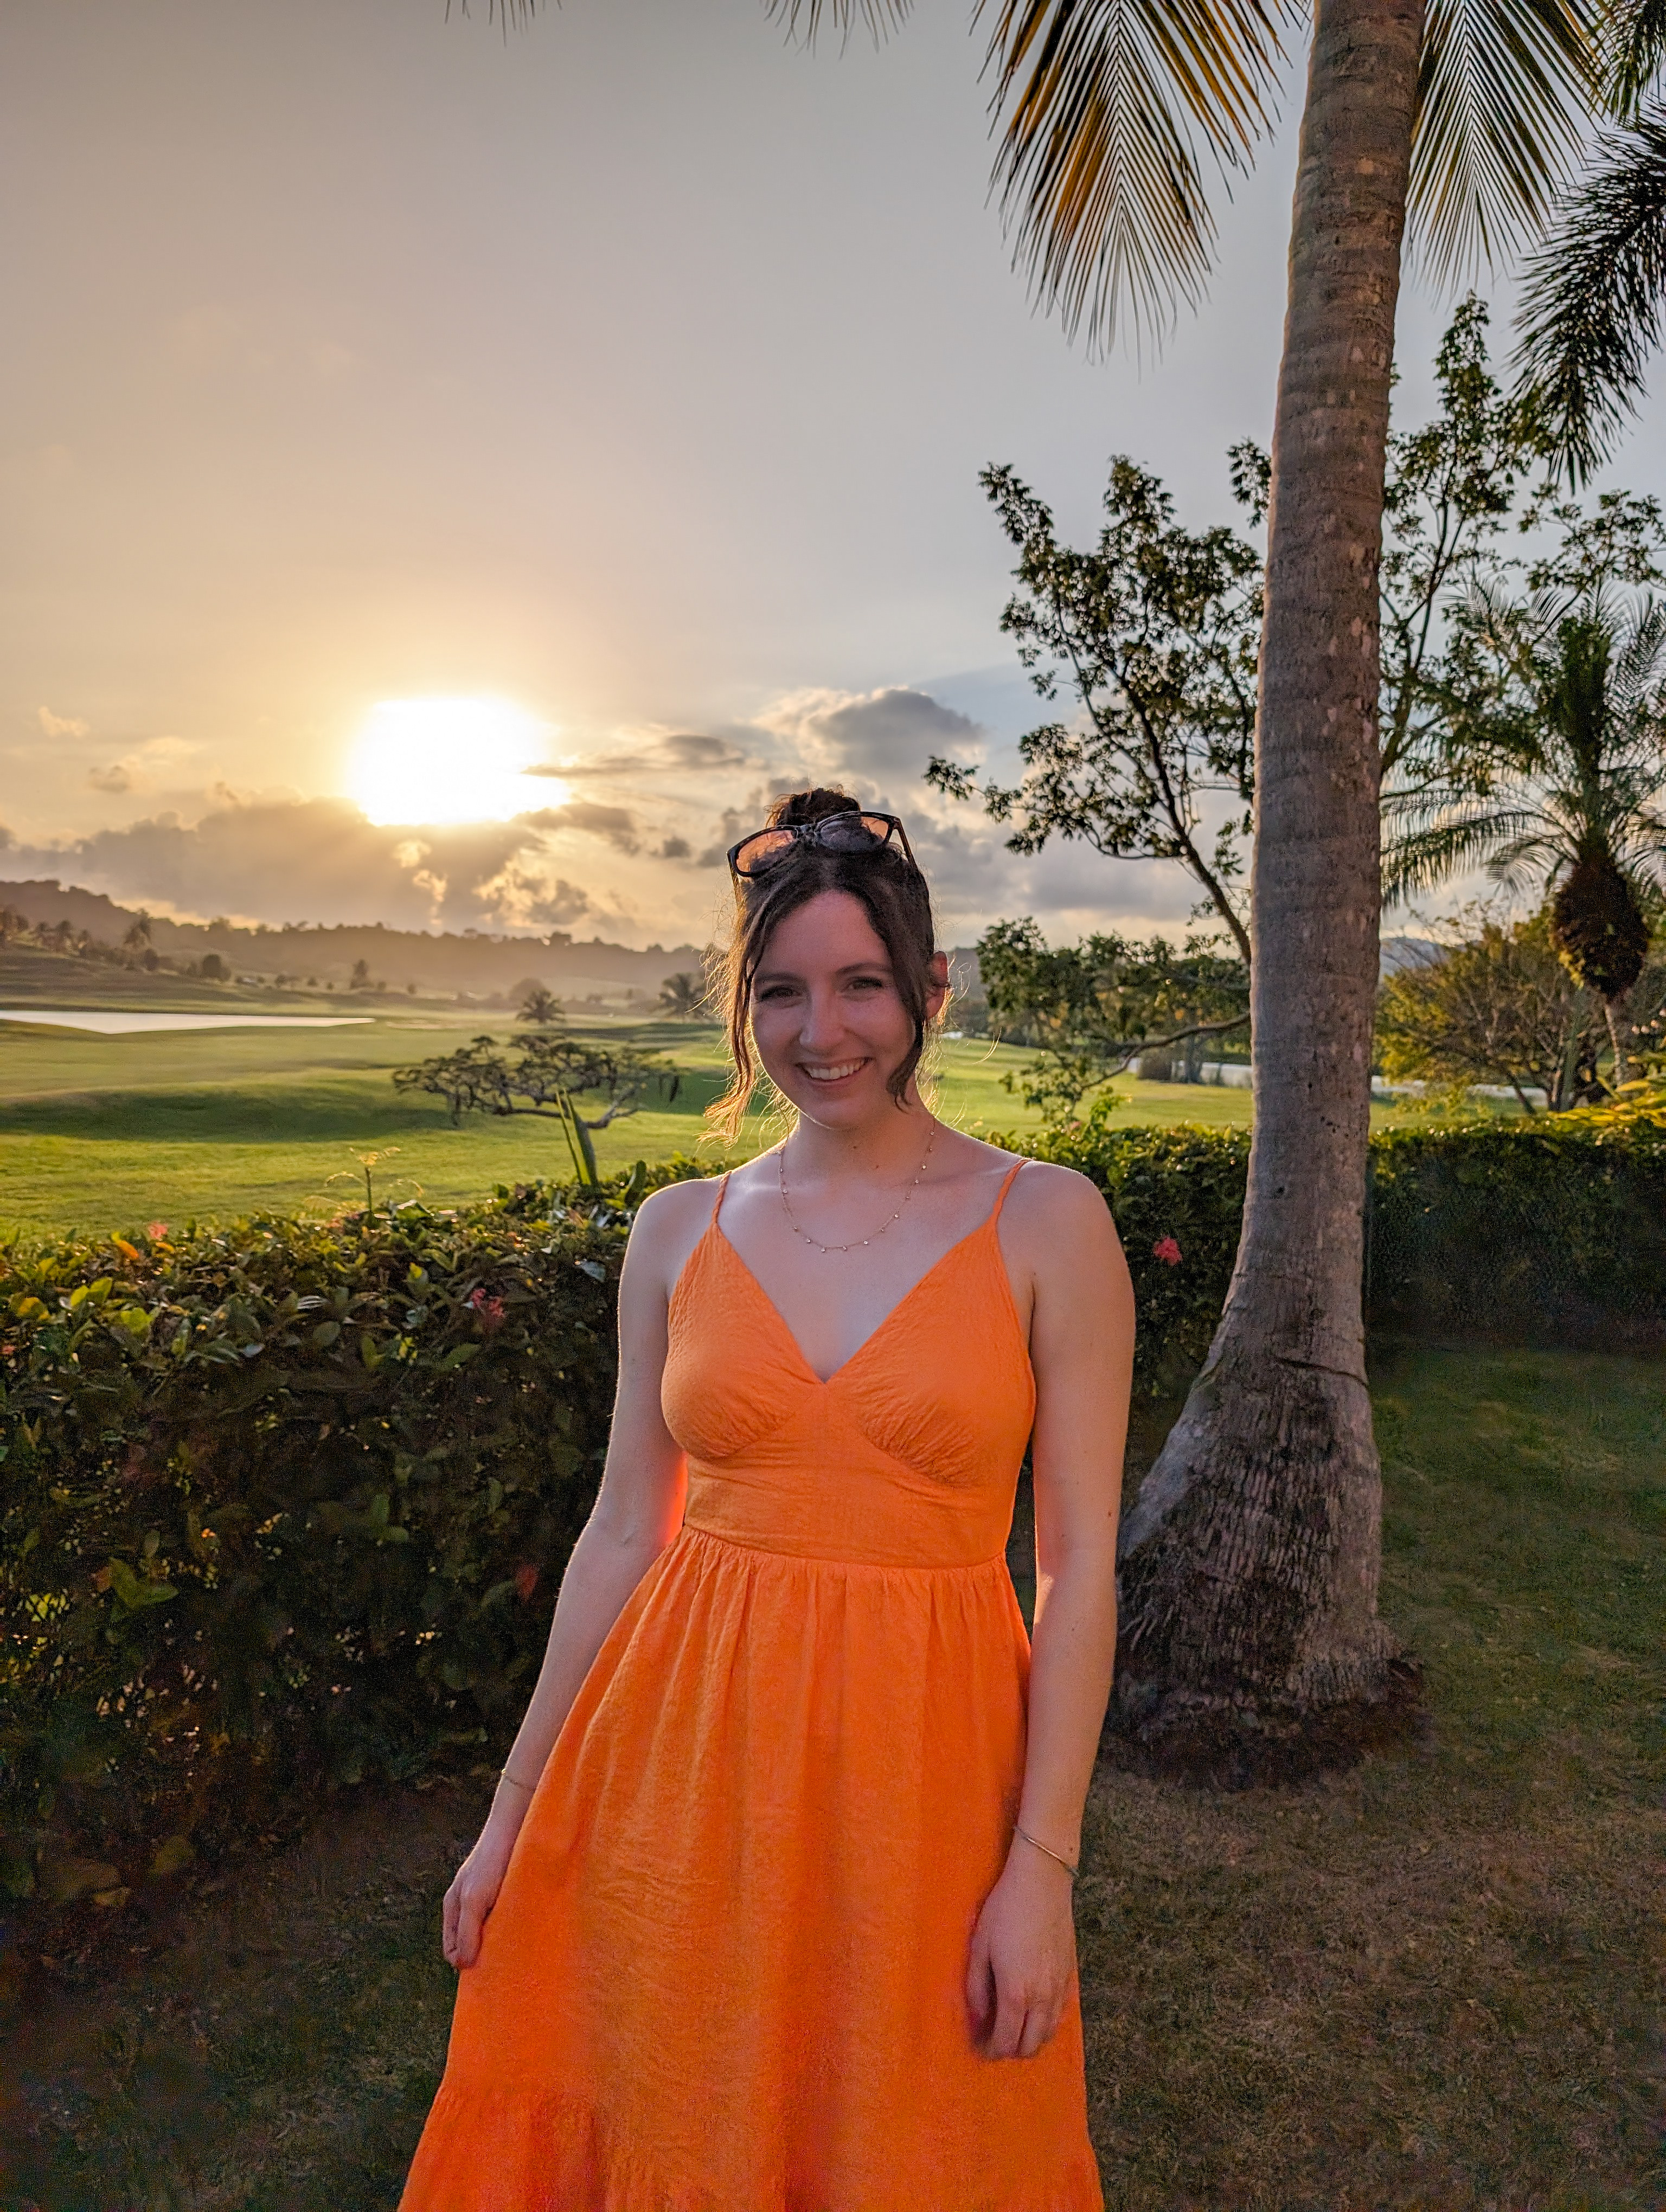 spring-break-puerto-rico-orange-dress-humacao-tropical-vacation